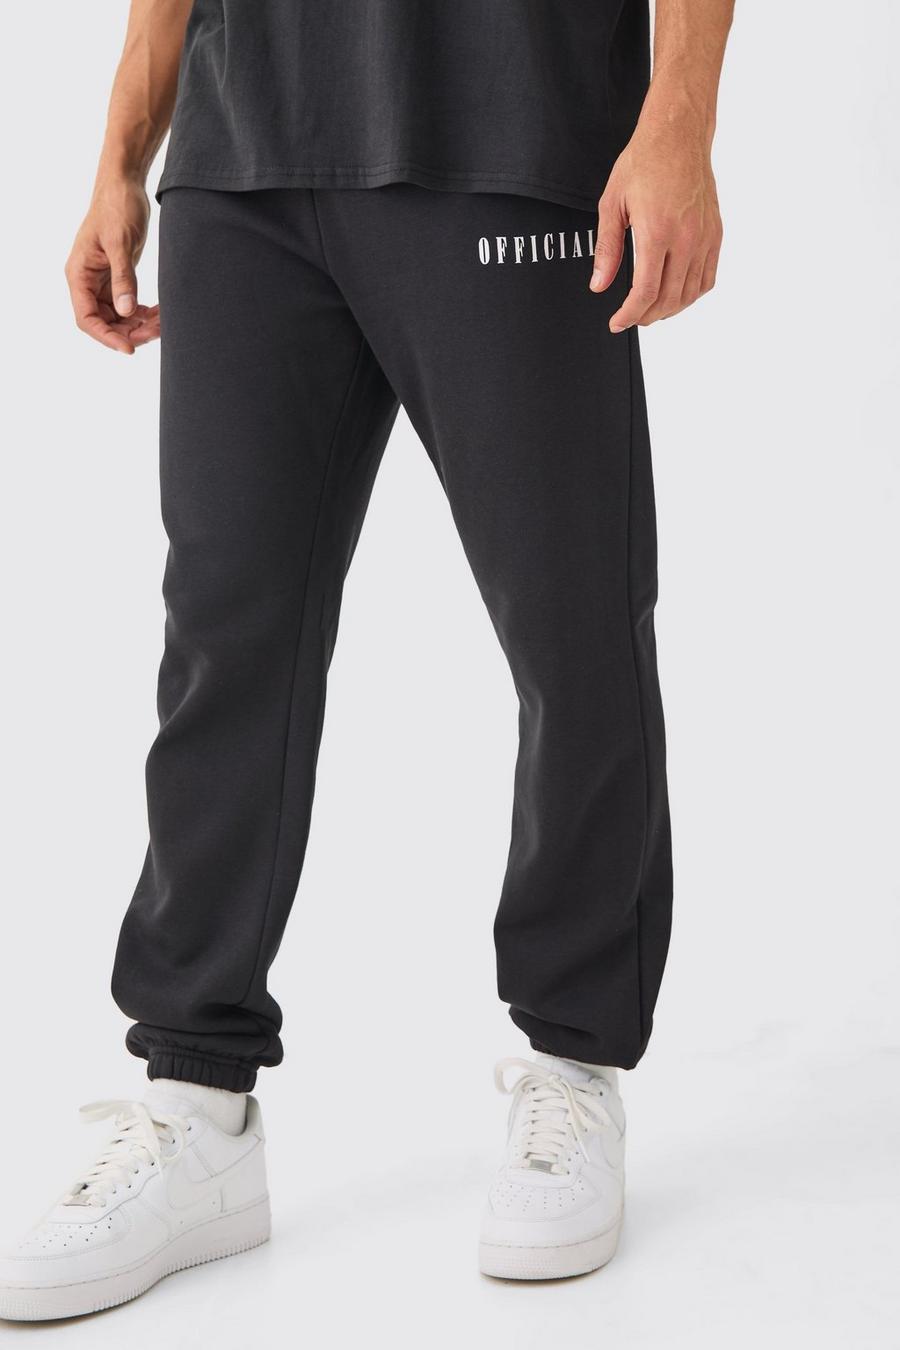 Pantaloni tuta Official Roman Regular Fit, Black